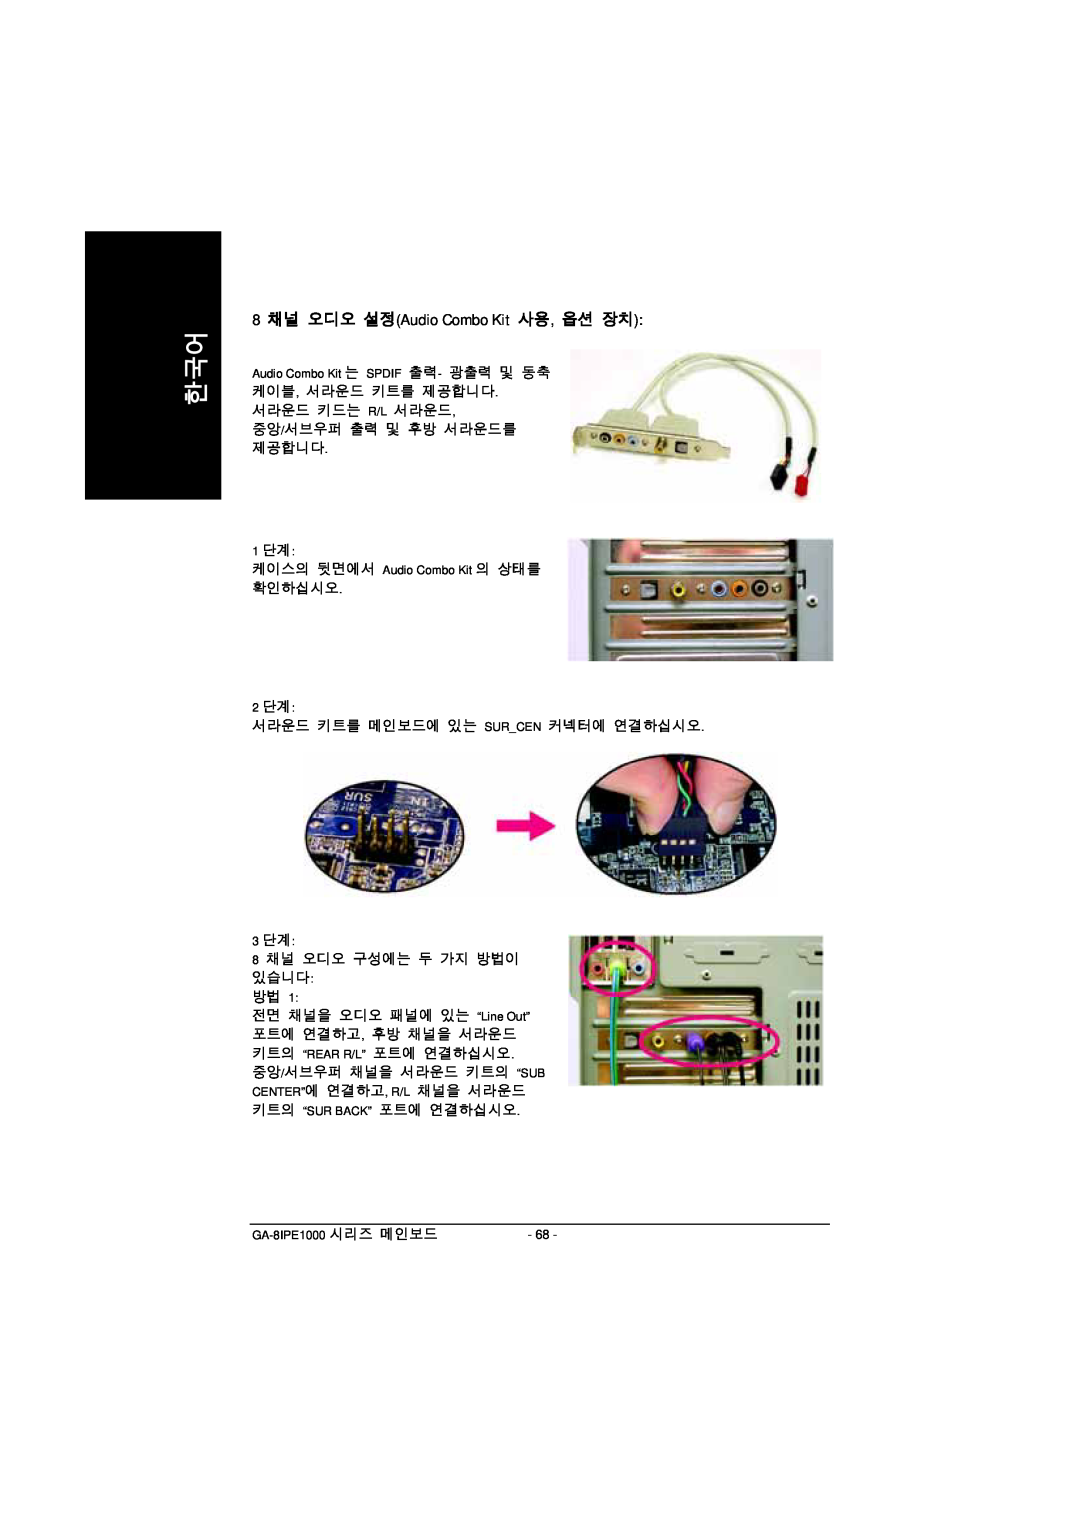 Intel GA-8IPE1000 manual 8 채널 오디오 설정Audio Combo Kit 사용, 옵션 장치 